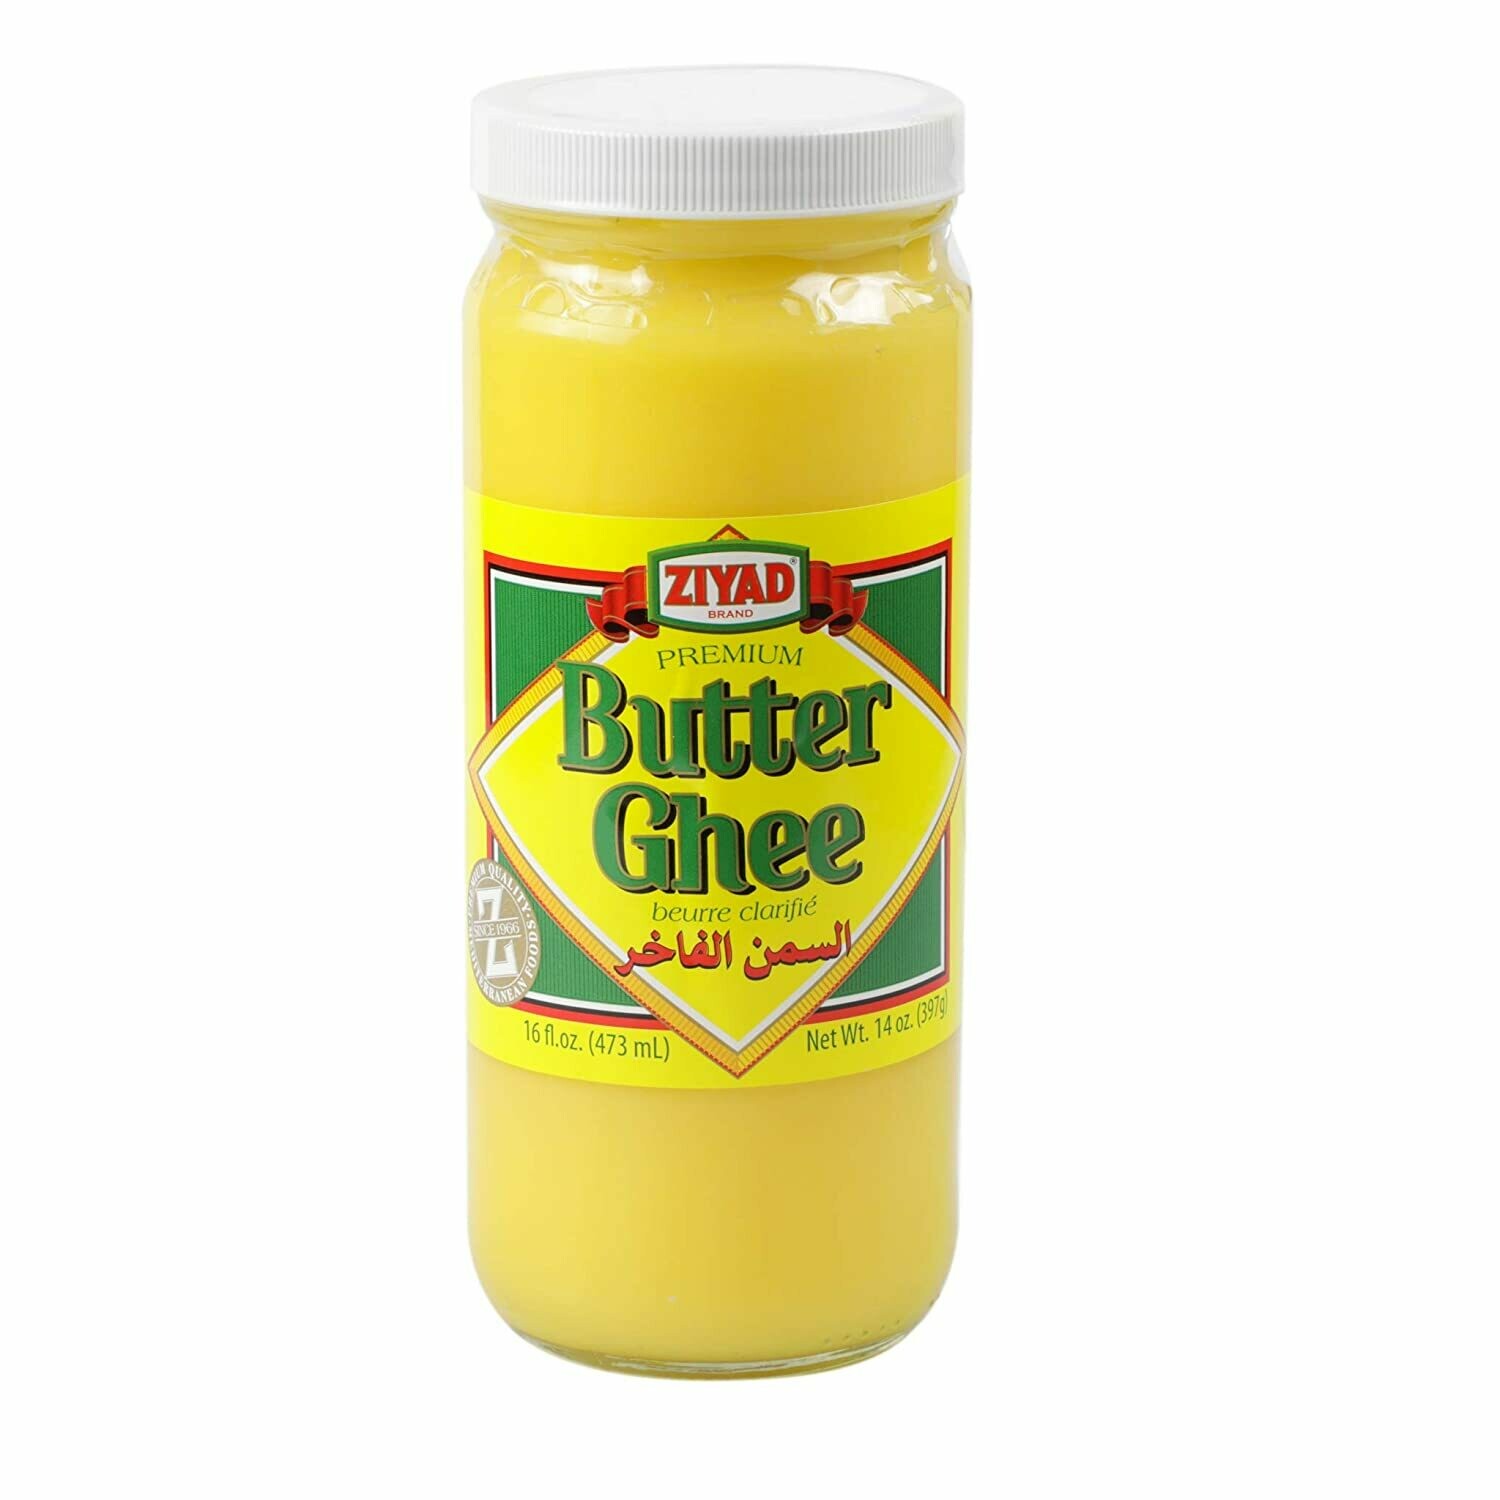 Ziyad Butter Ghee 16 oz Glass Jar